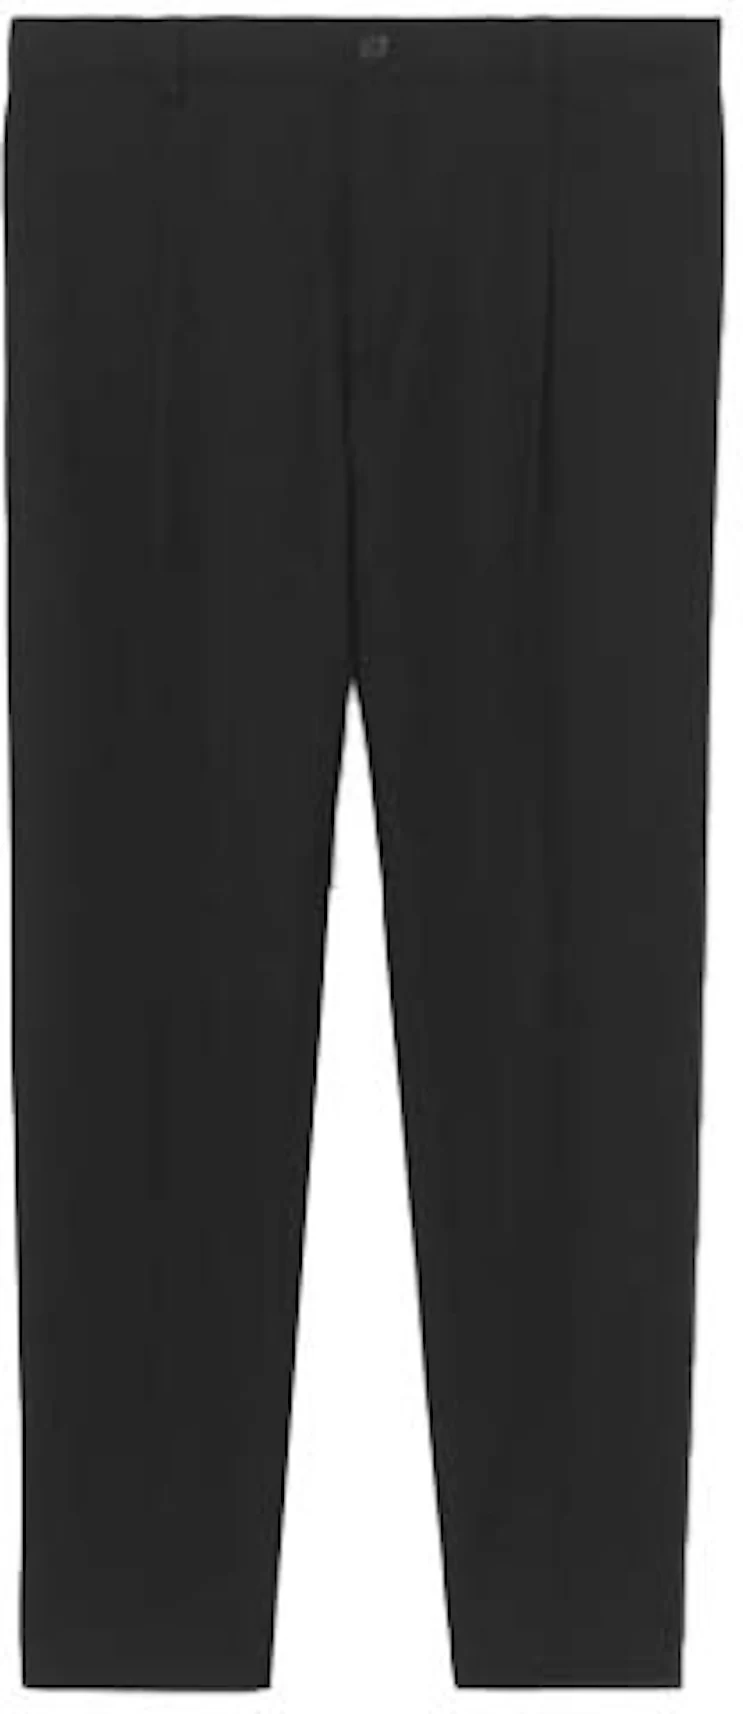 Burberry Black Wool Regular Fit Pants S Burberry